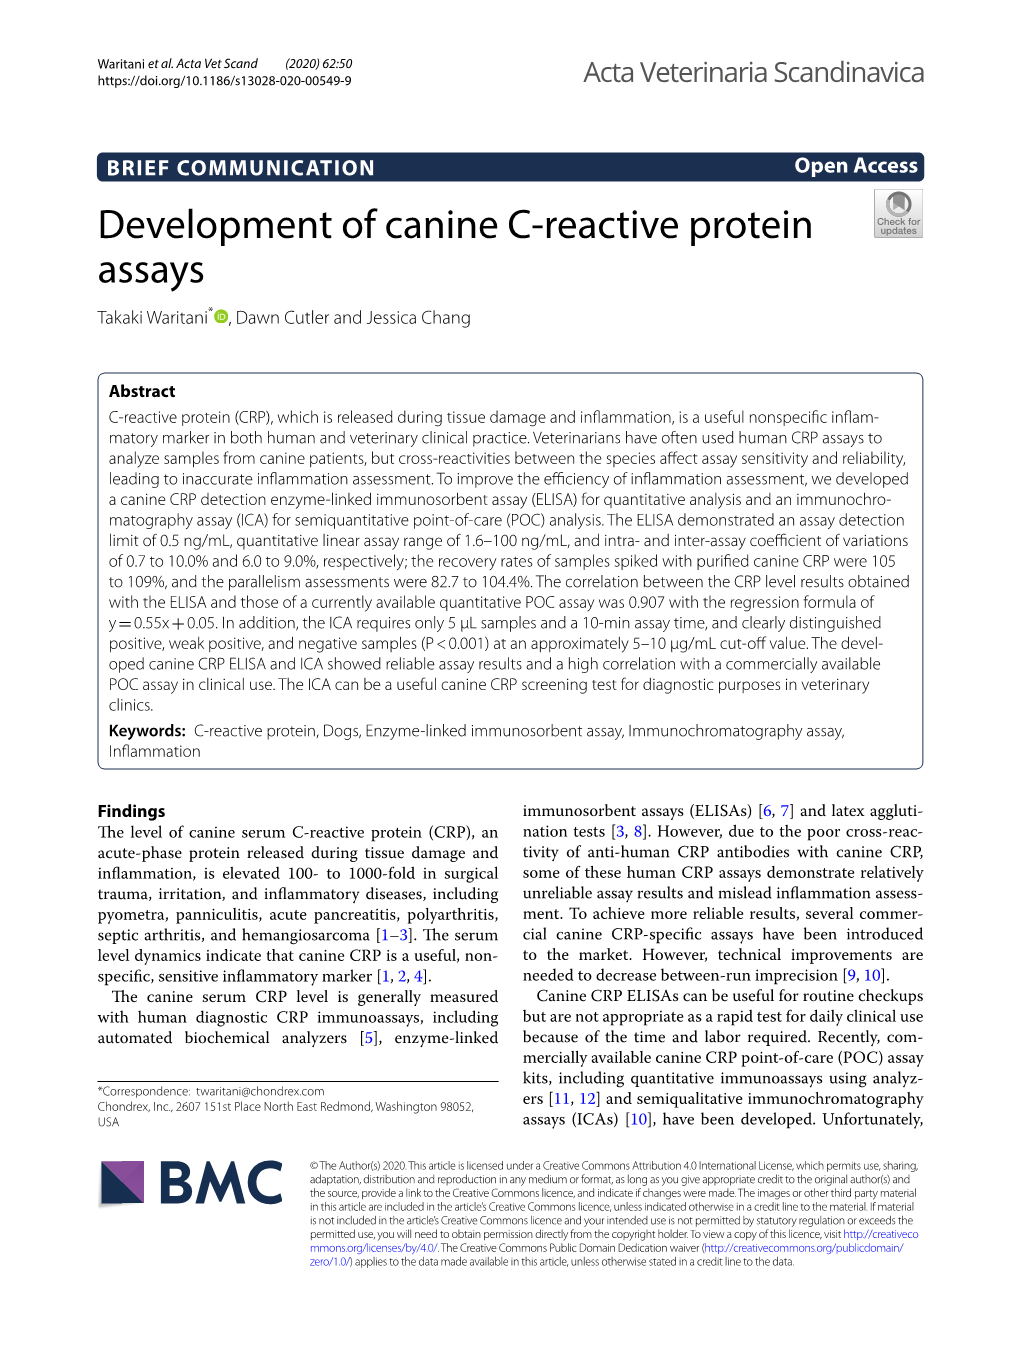 Development of Canine C-Reactive Protein Assays